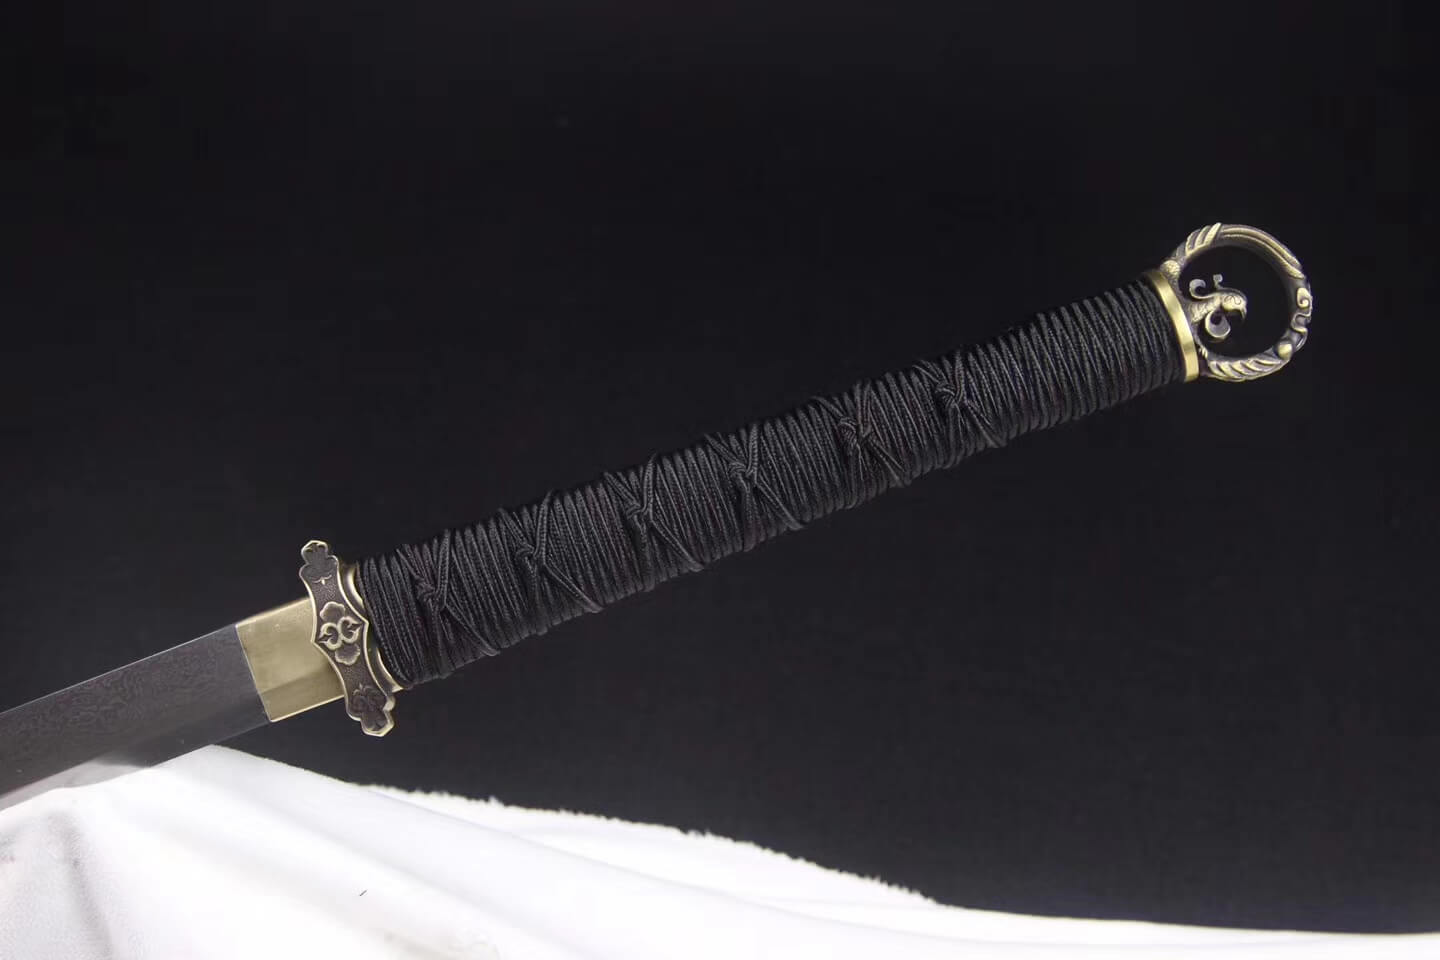 3D Printable Hwando 환도 - Korean Ring Sword by Jovey